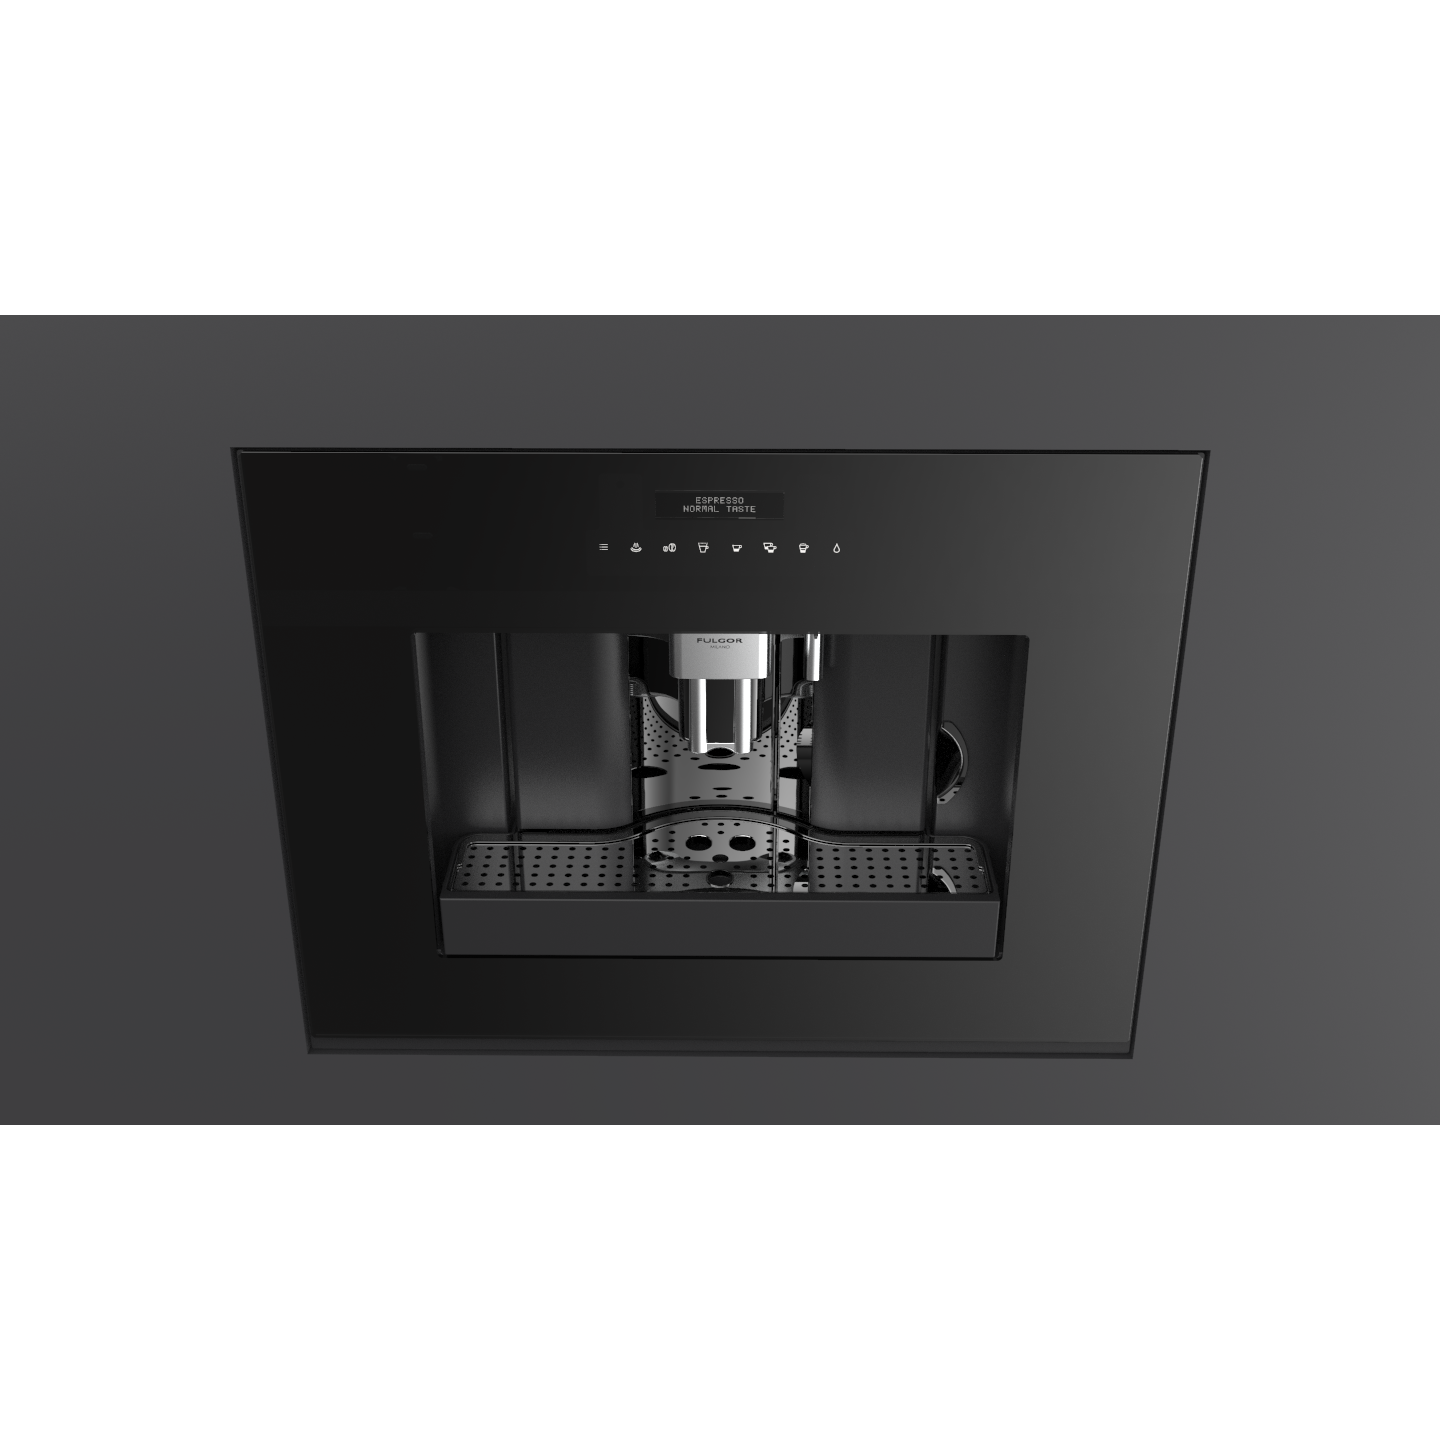 Fulgor Milano 24" Built-In Fully Automatic Coffee Machine, Black Glass - F7BC24B1